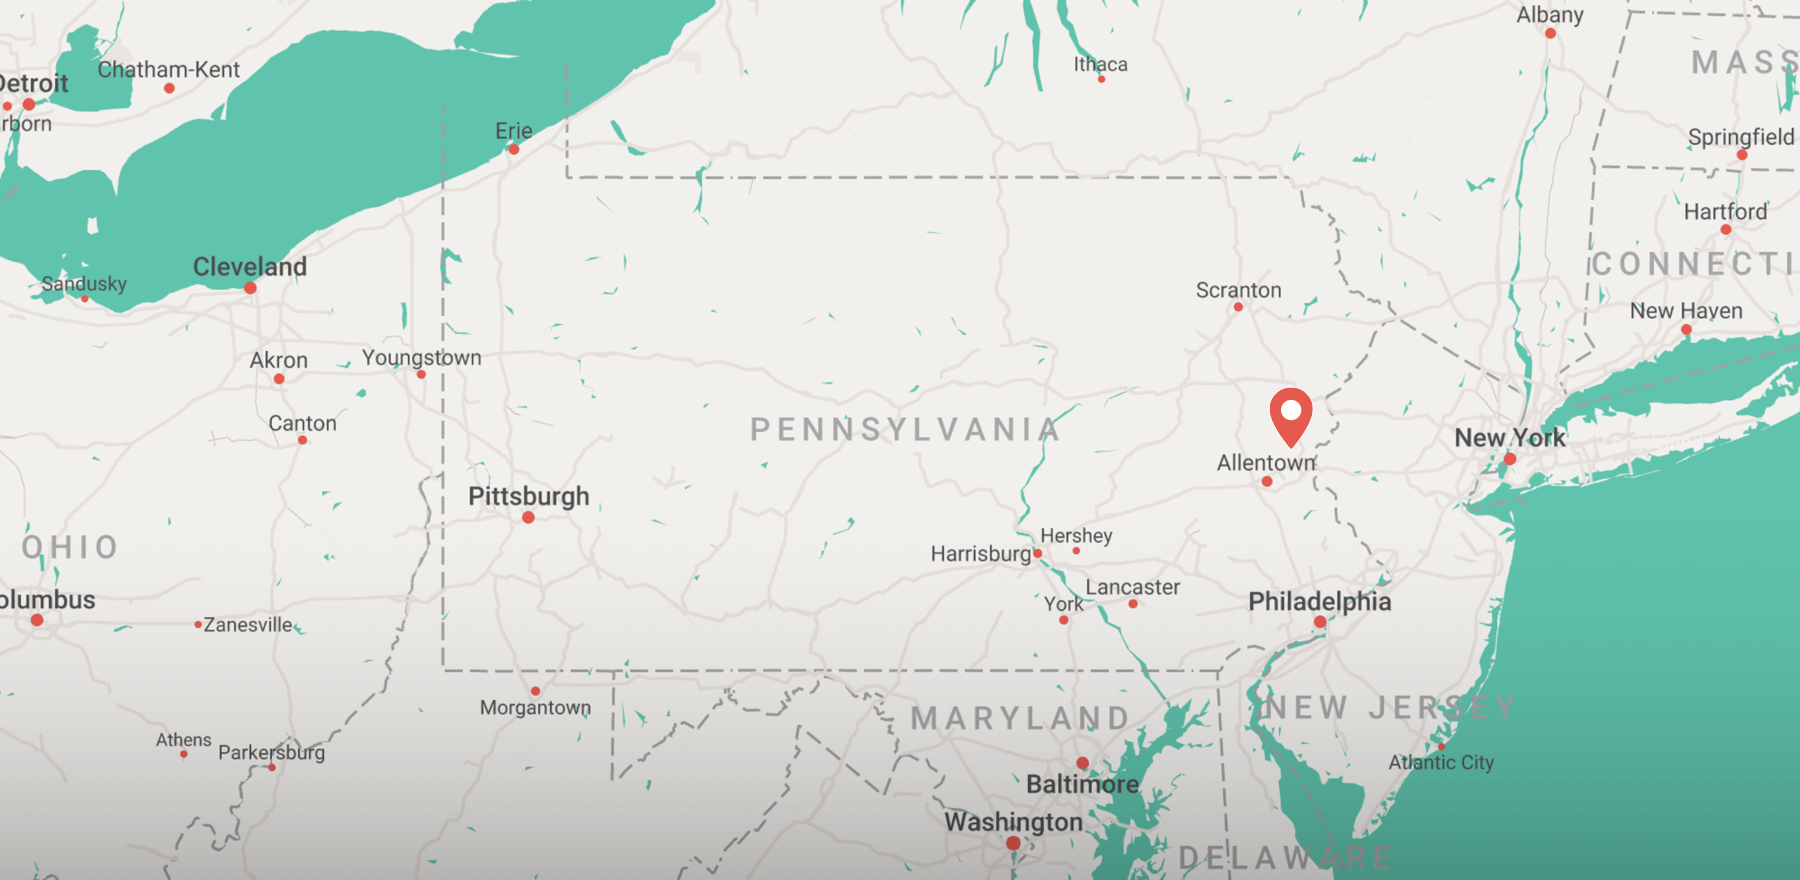 Mp showing location of Lehigh University in Bethlehem Pennsylvania